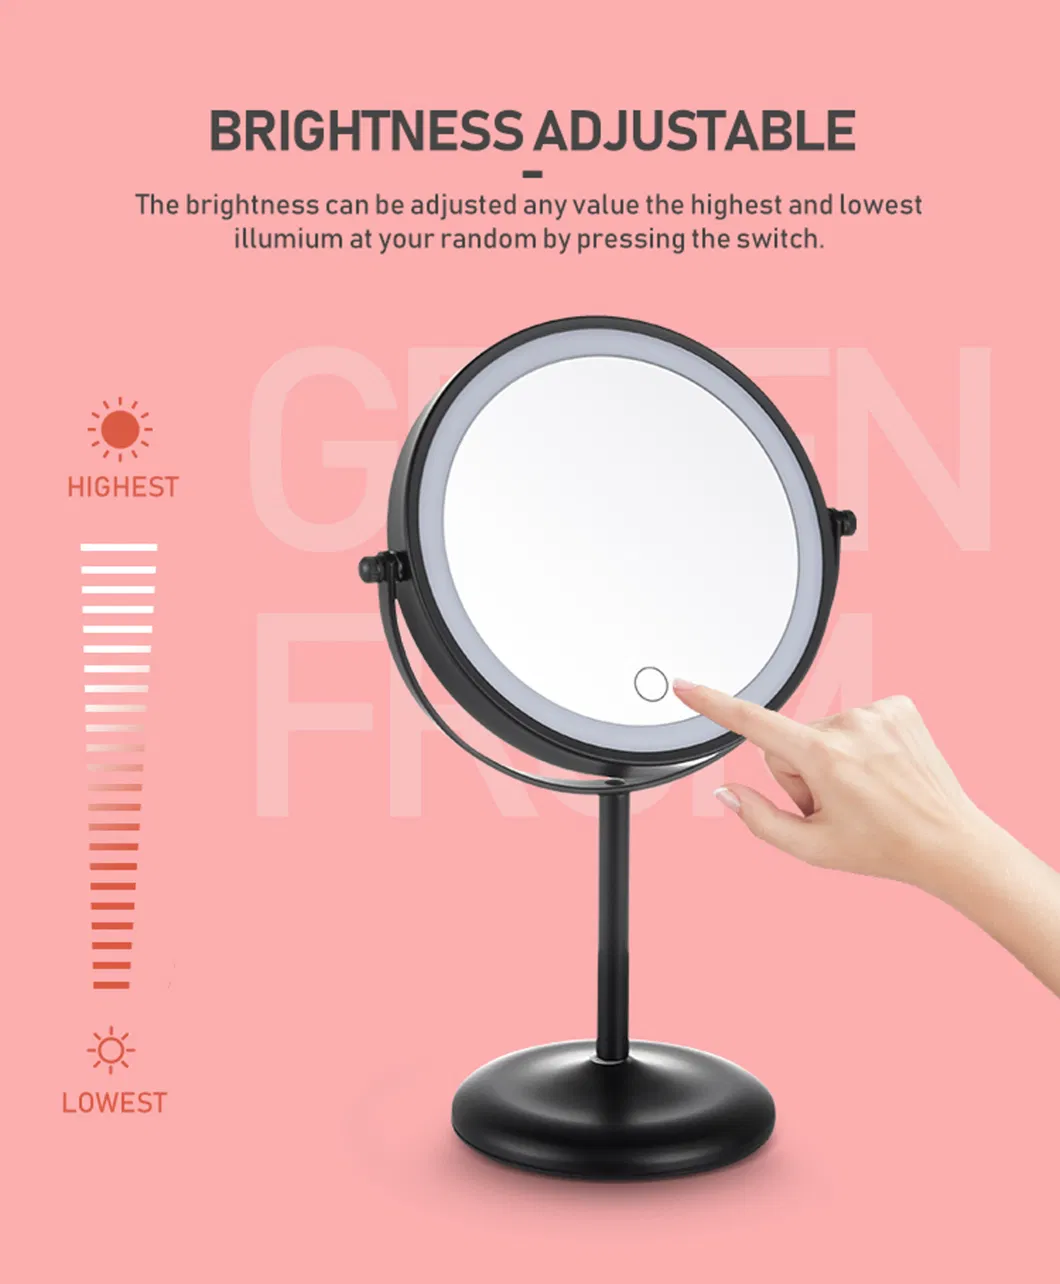 Espelho 1X/5X LED Mirror Free Angle Adjustment Round Desk Standing Makeup Mirror